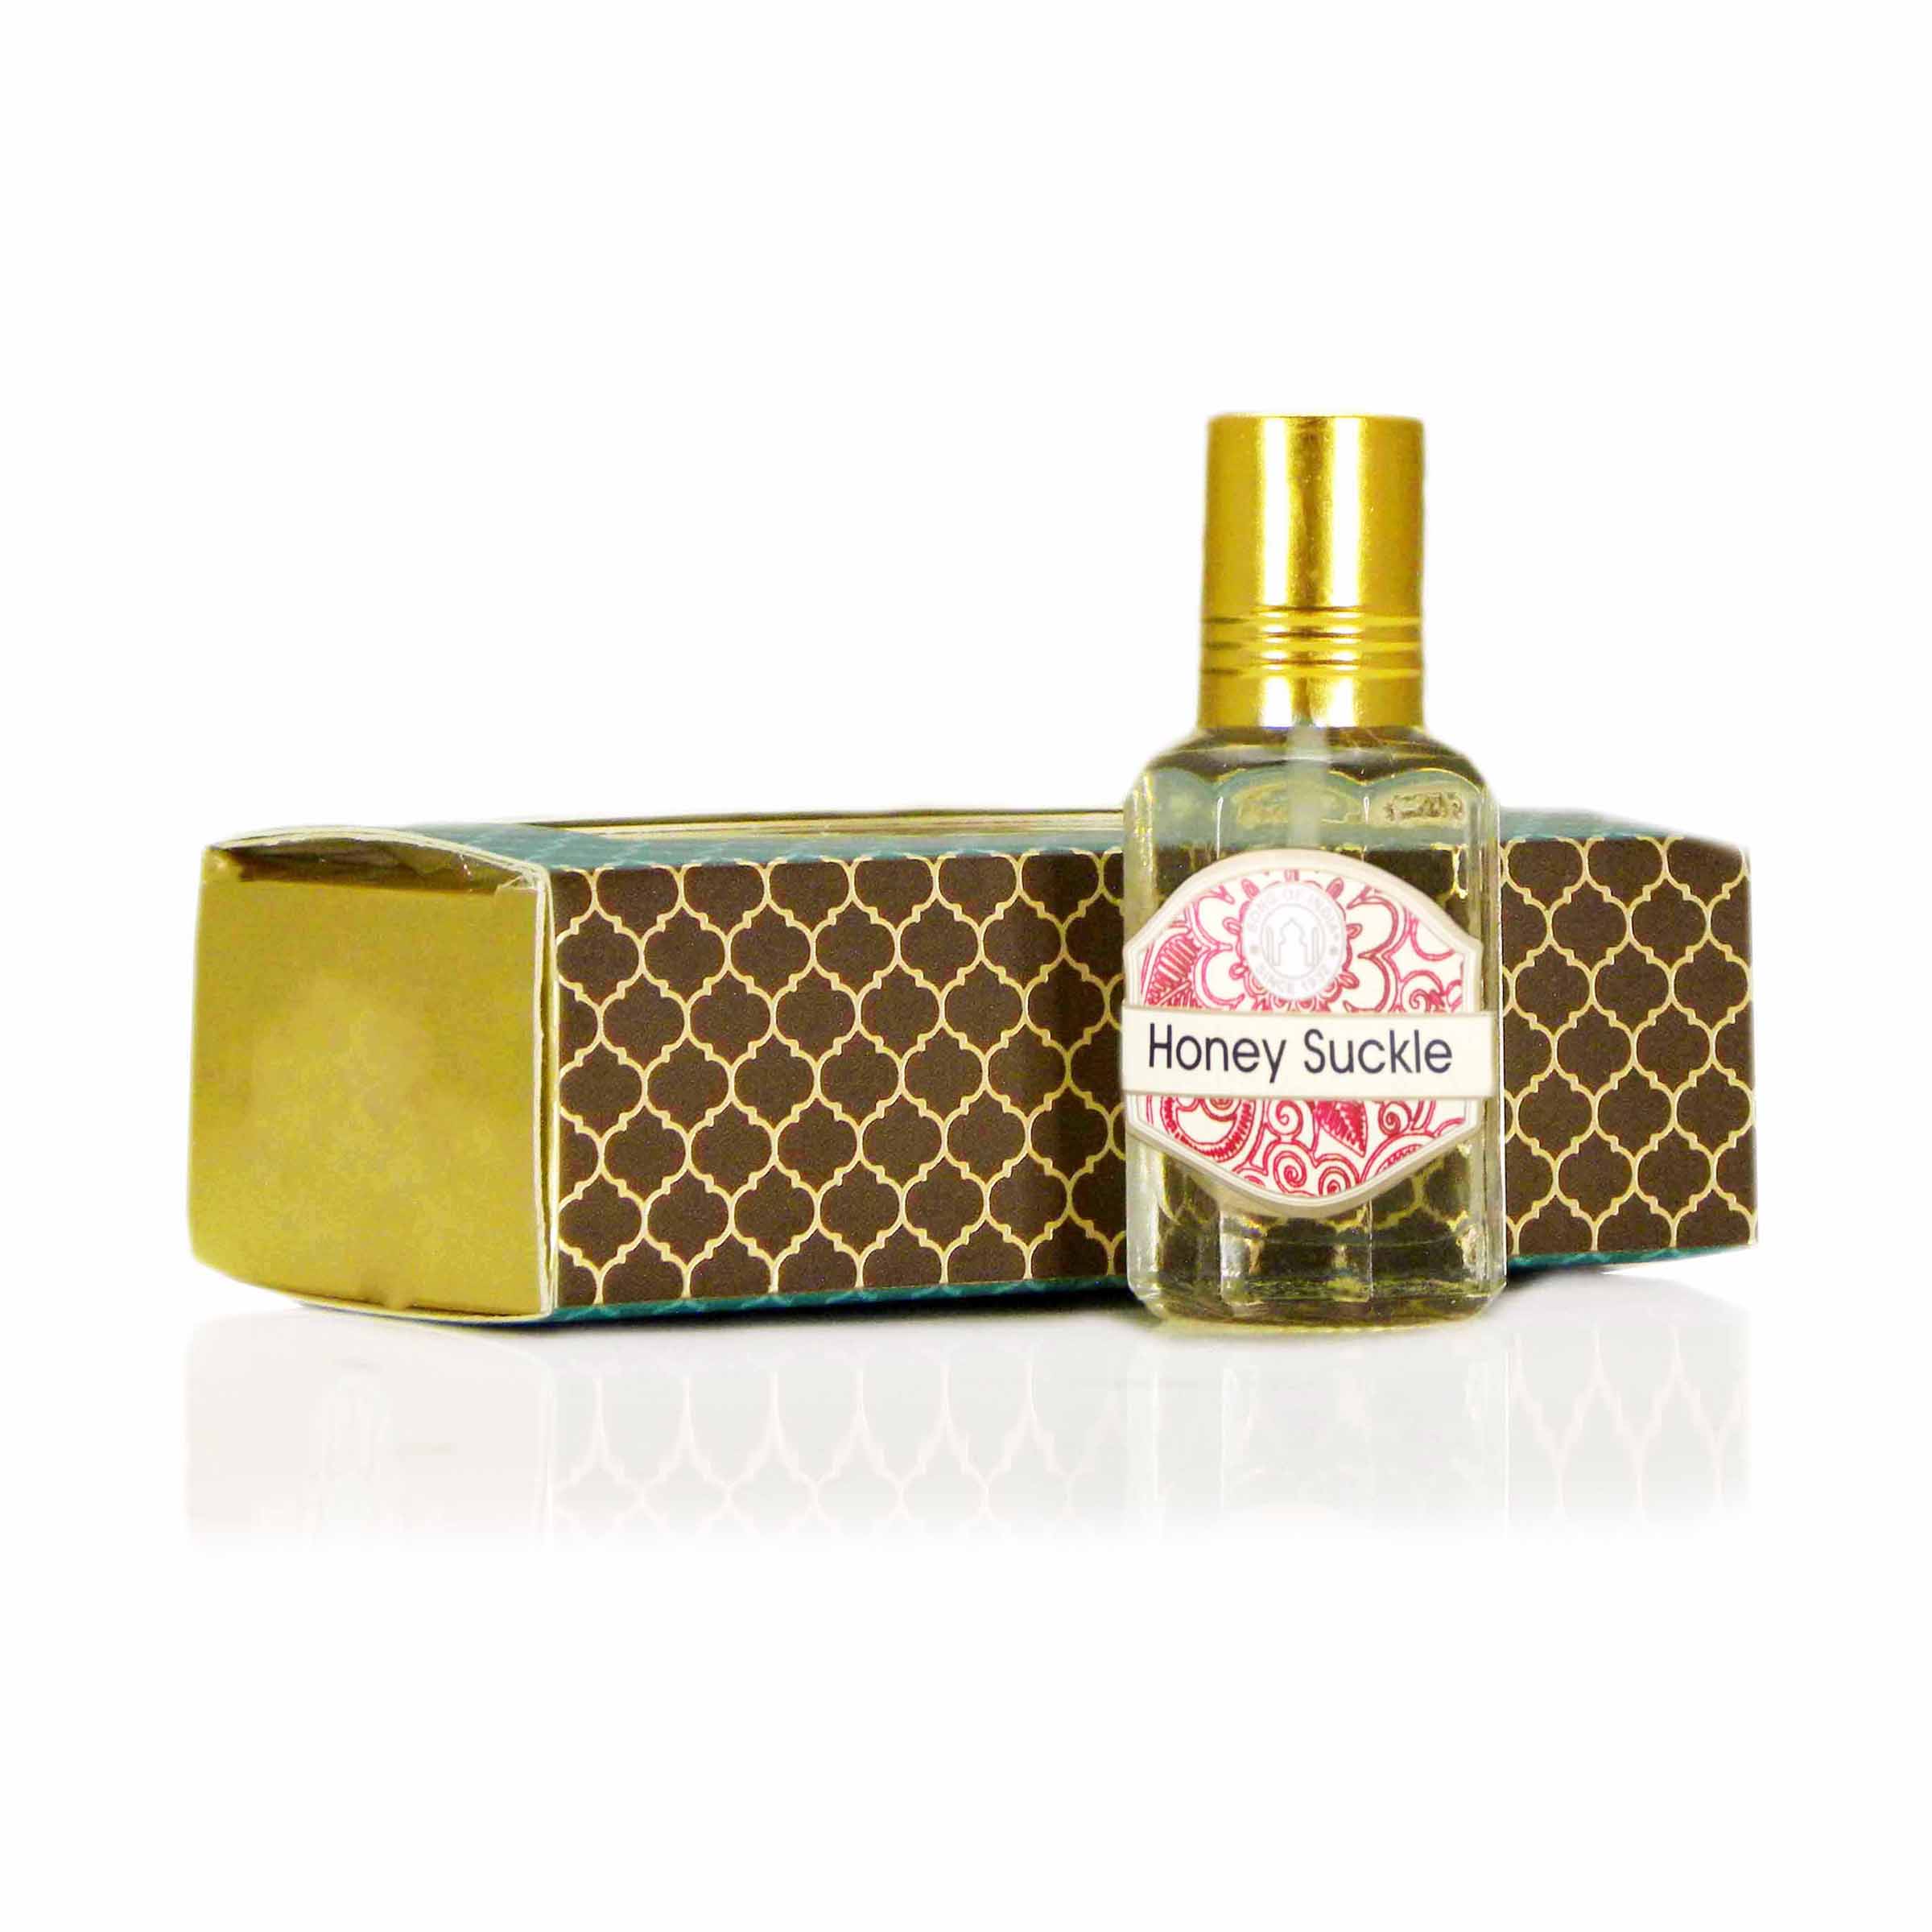 Song of India 10 ml Honeysuckle Perfume Oil